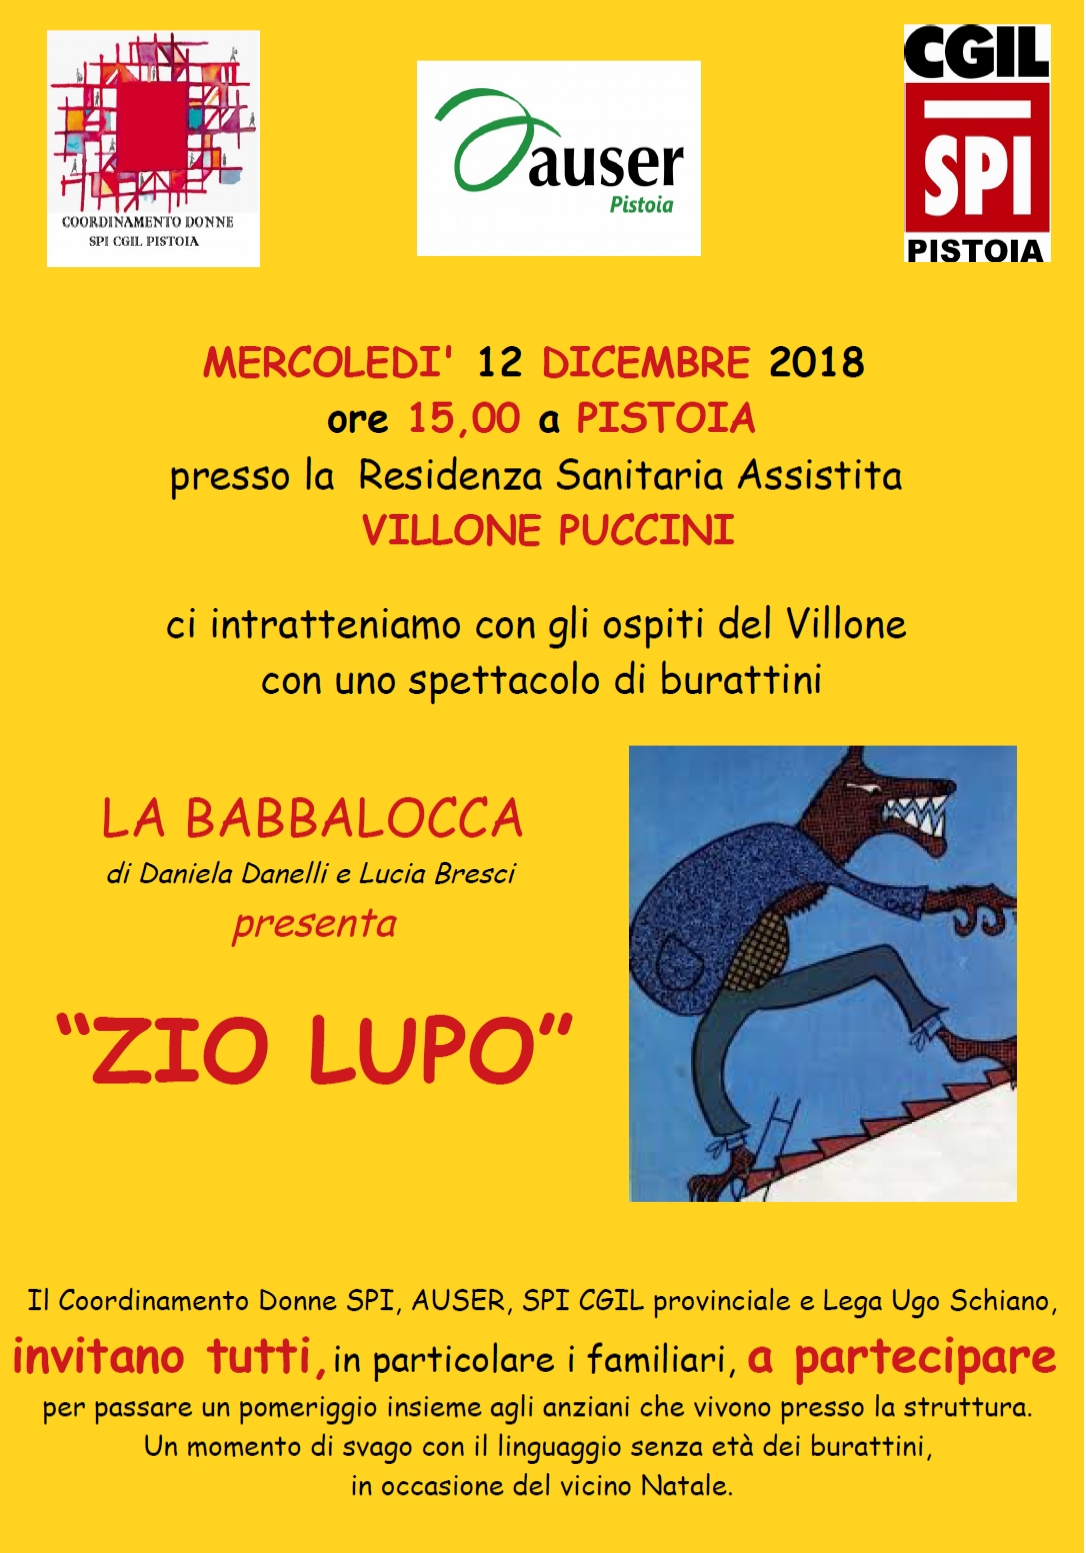 Burattini 2018 Villon Puccini PT.jpg